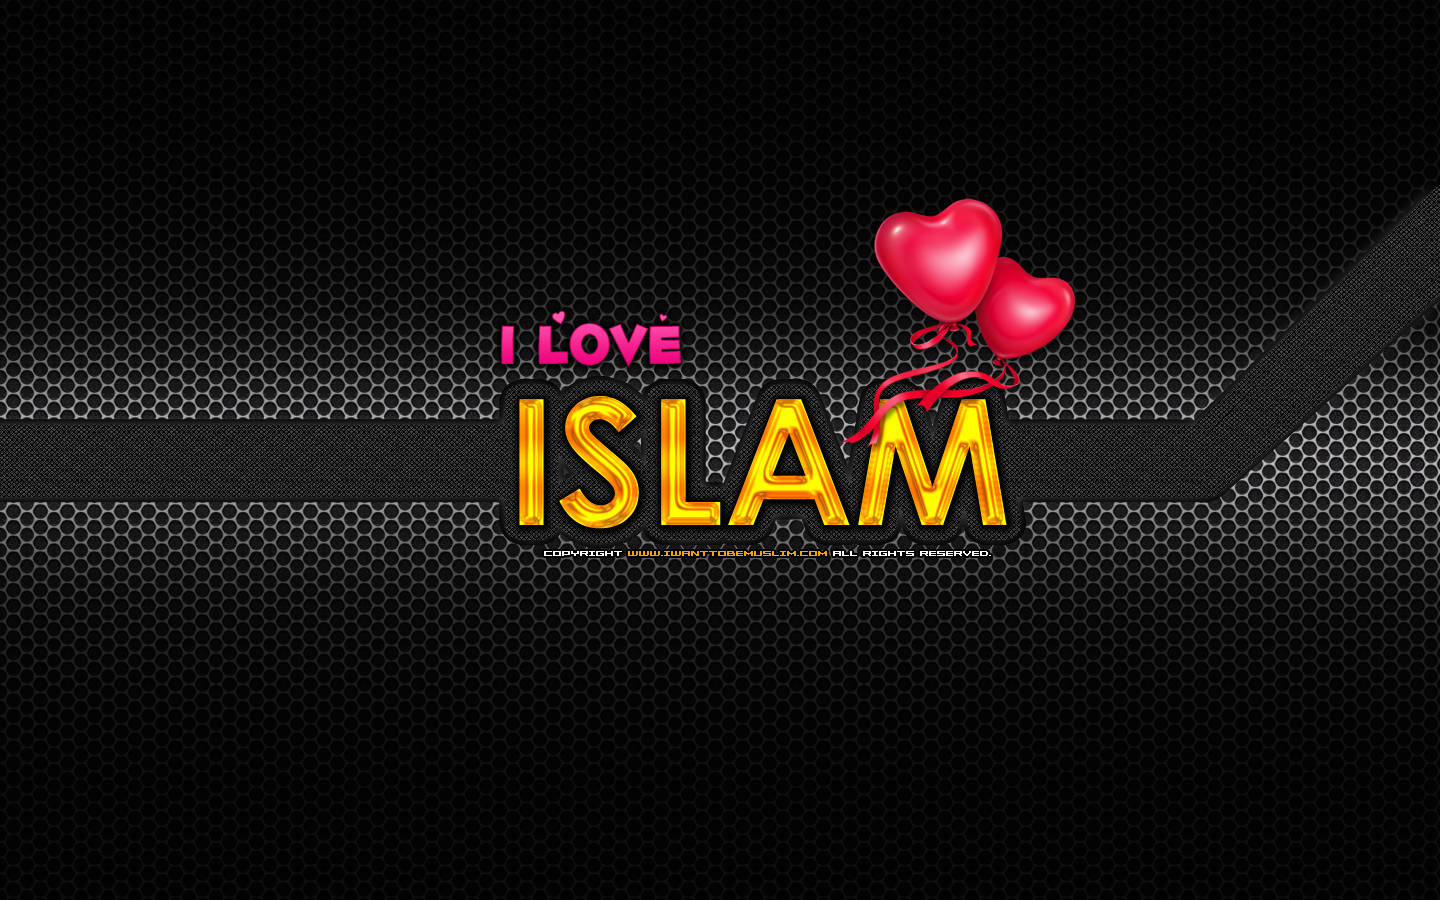  - islamic-wallpaper-i-love-islam-islam-wallpaper